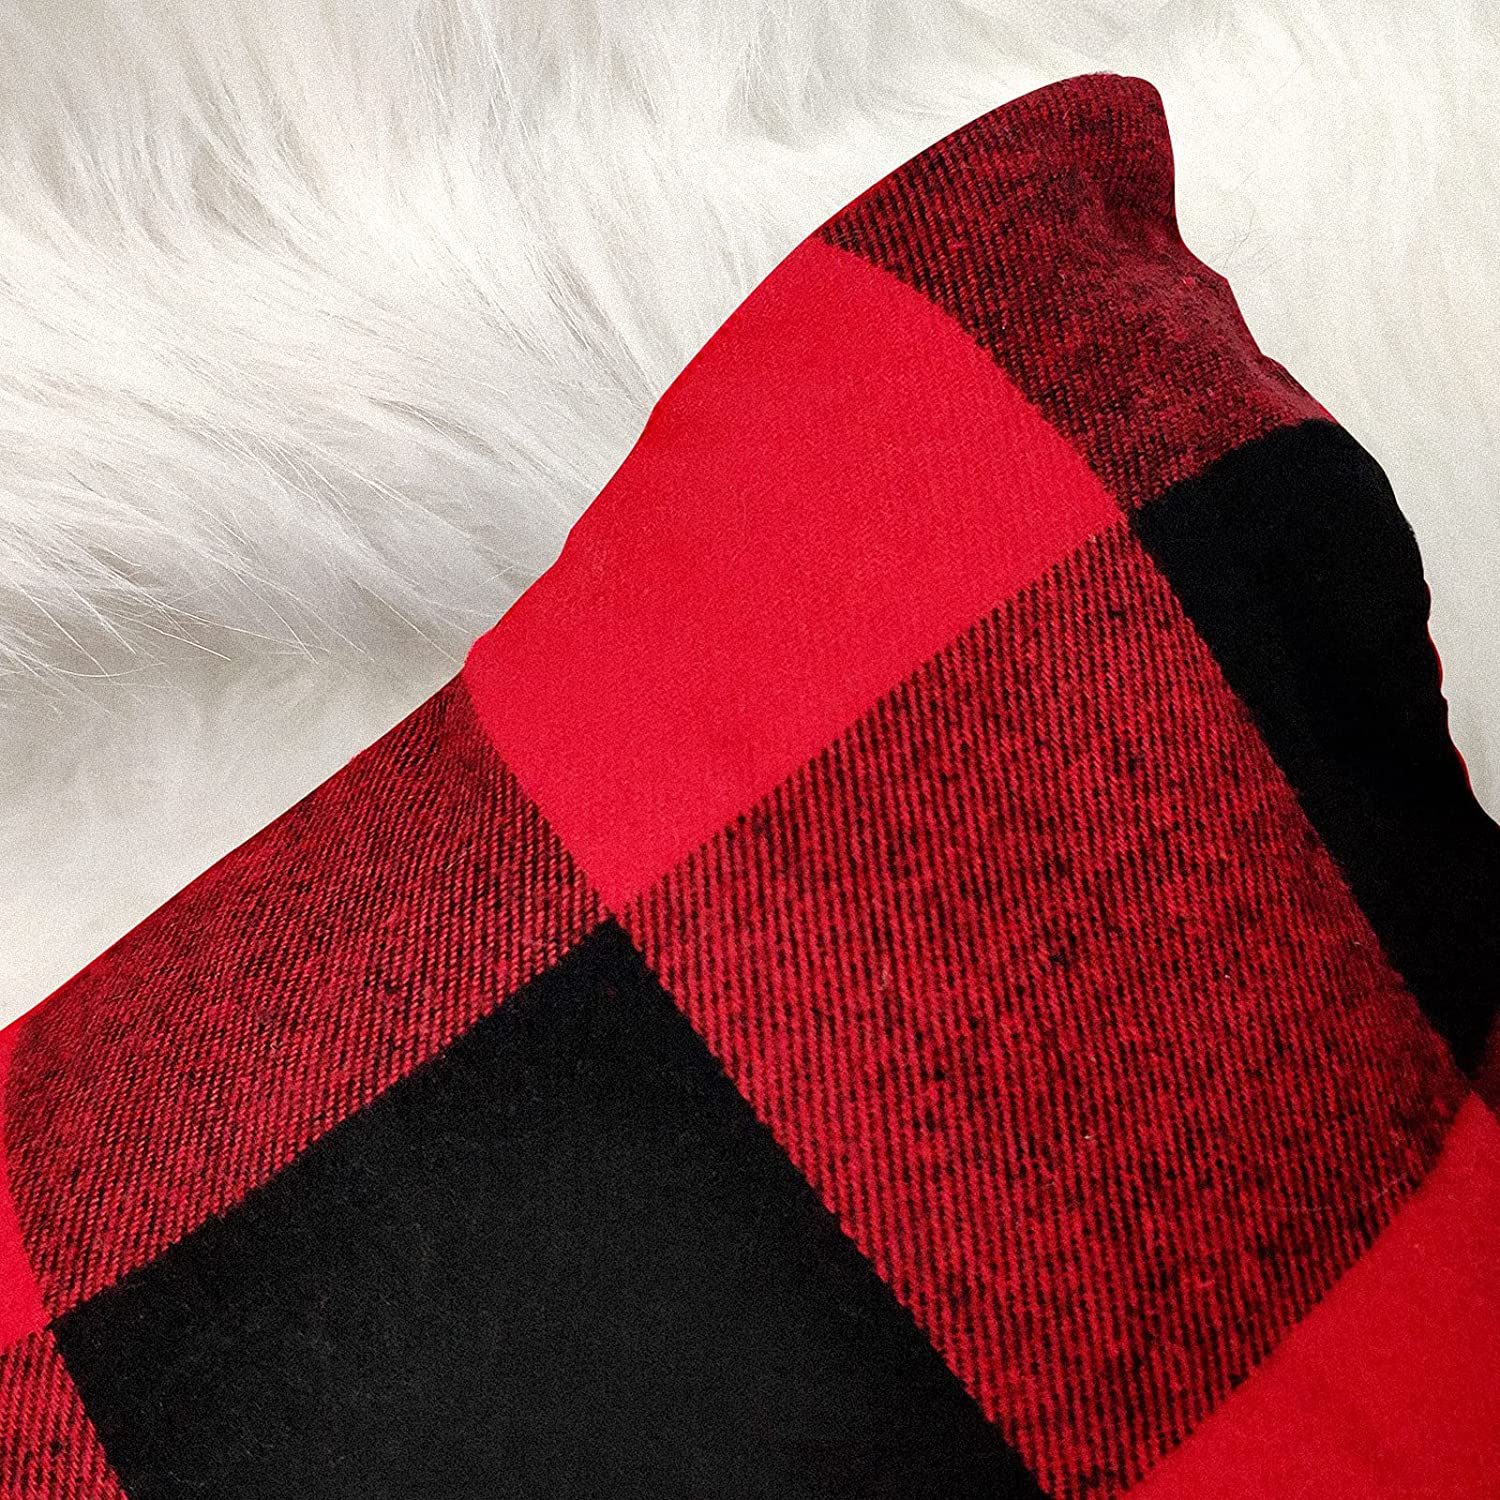 Set of 2 Farmhouse Buffalo Check Pillow Covers 18 x 18 with 2 Bonus Coasters (Red & Black)